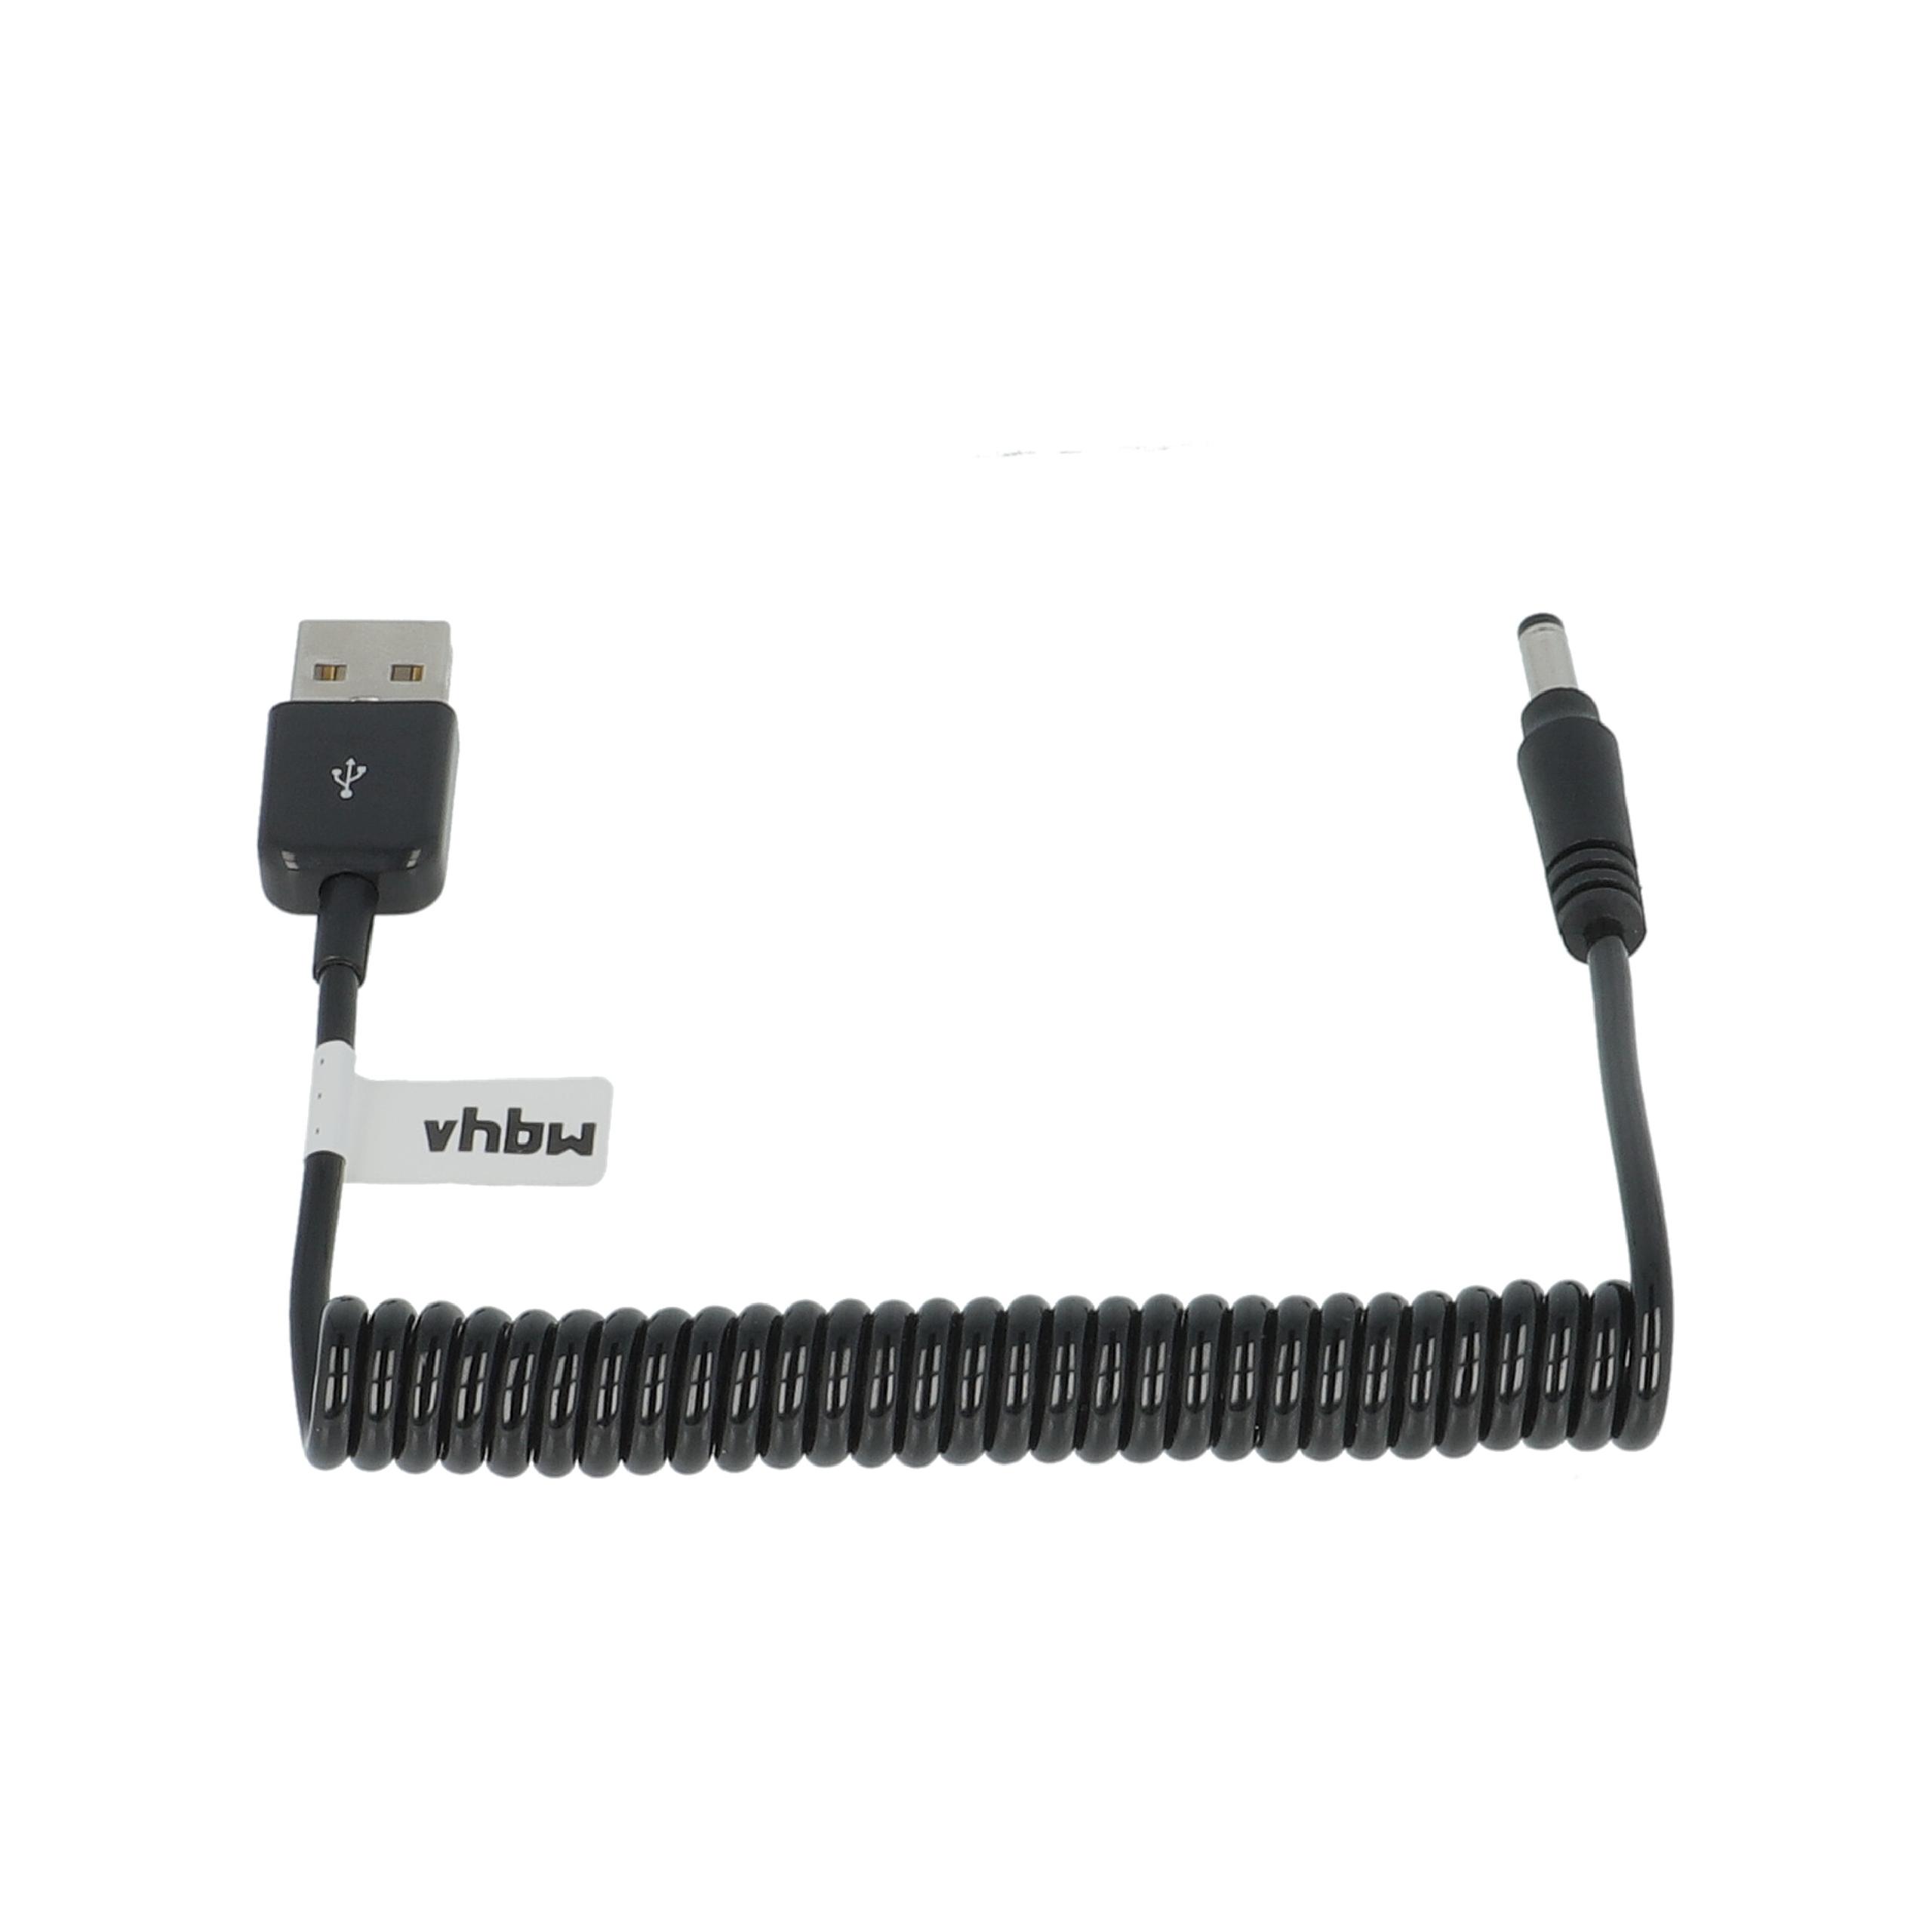 Kabel USB do ładowania aparatu Panasonic zamiennik Panasonic K2GHYYS00002 - 1 m